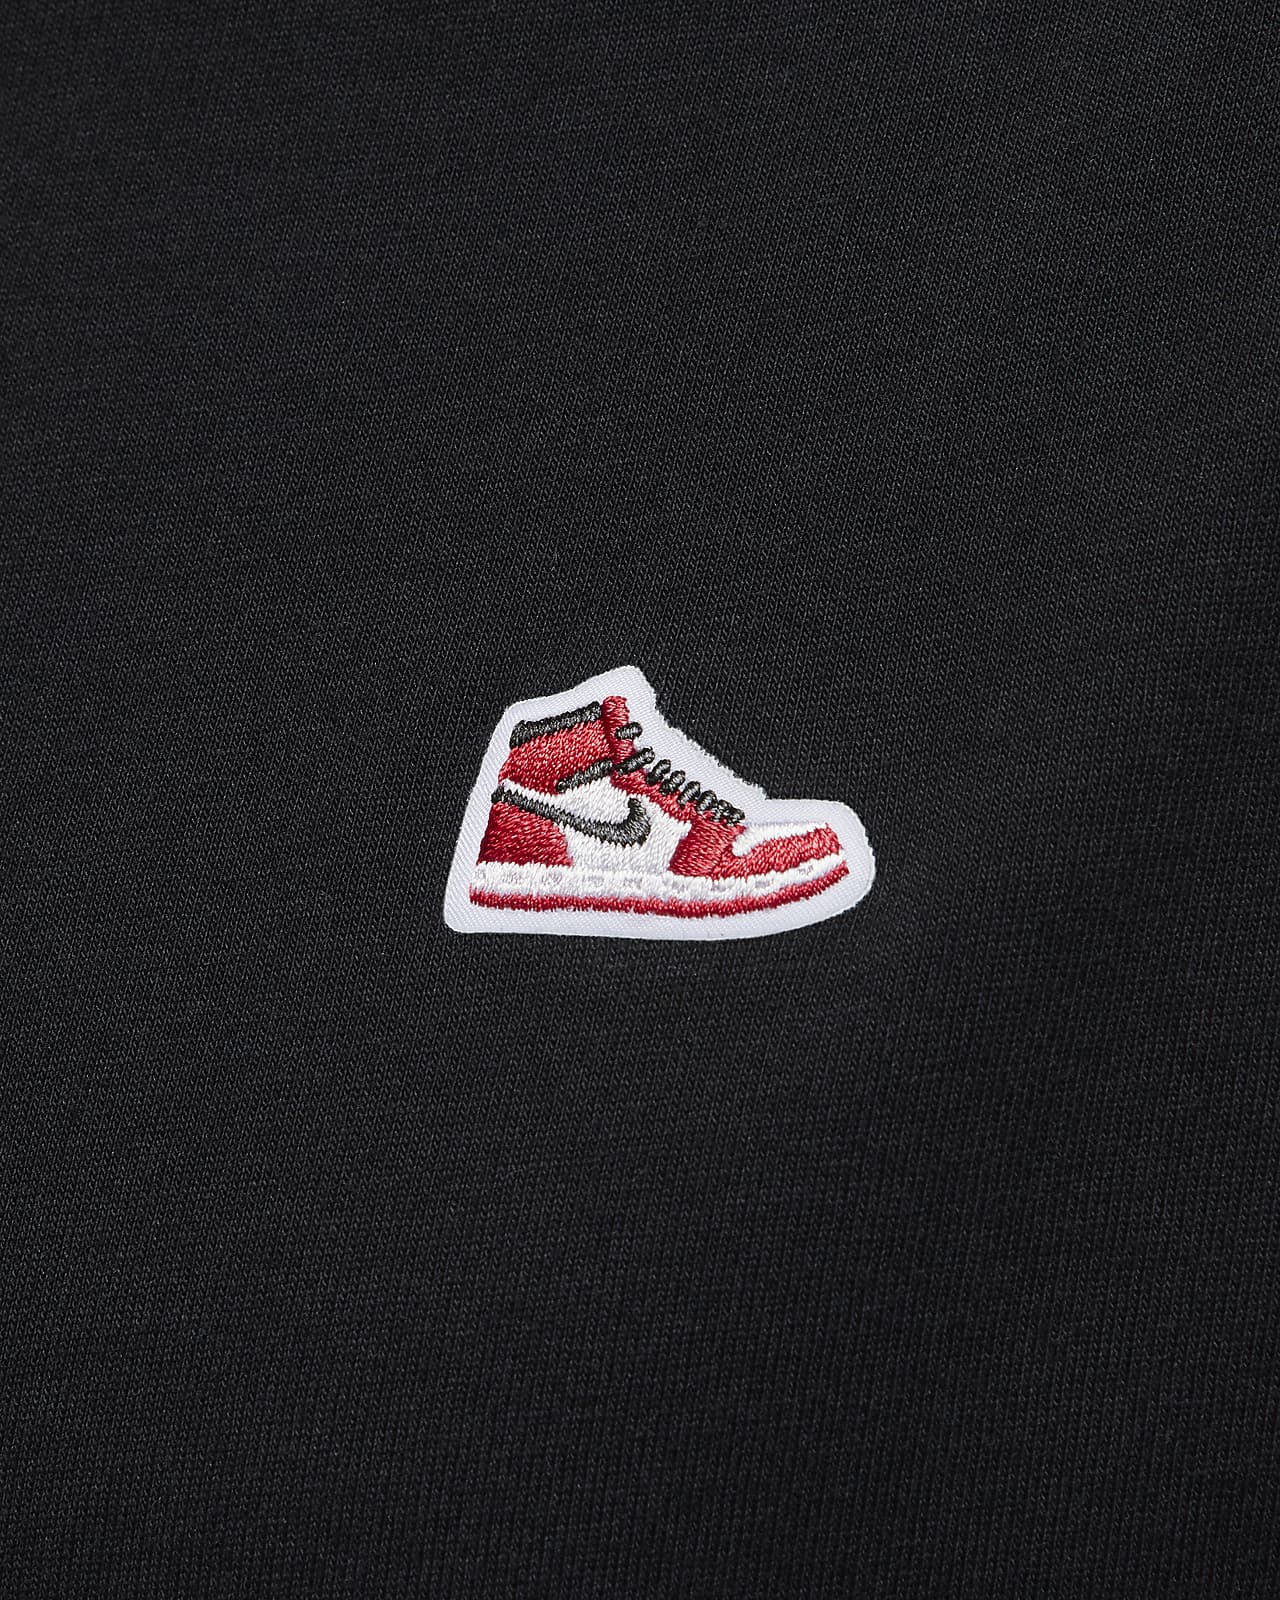 Jordan Brand Men's T-Shirt. Nike PT